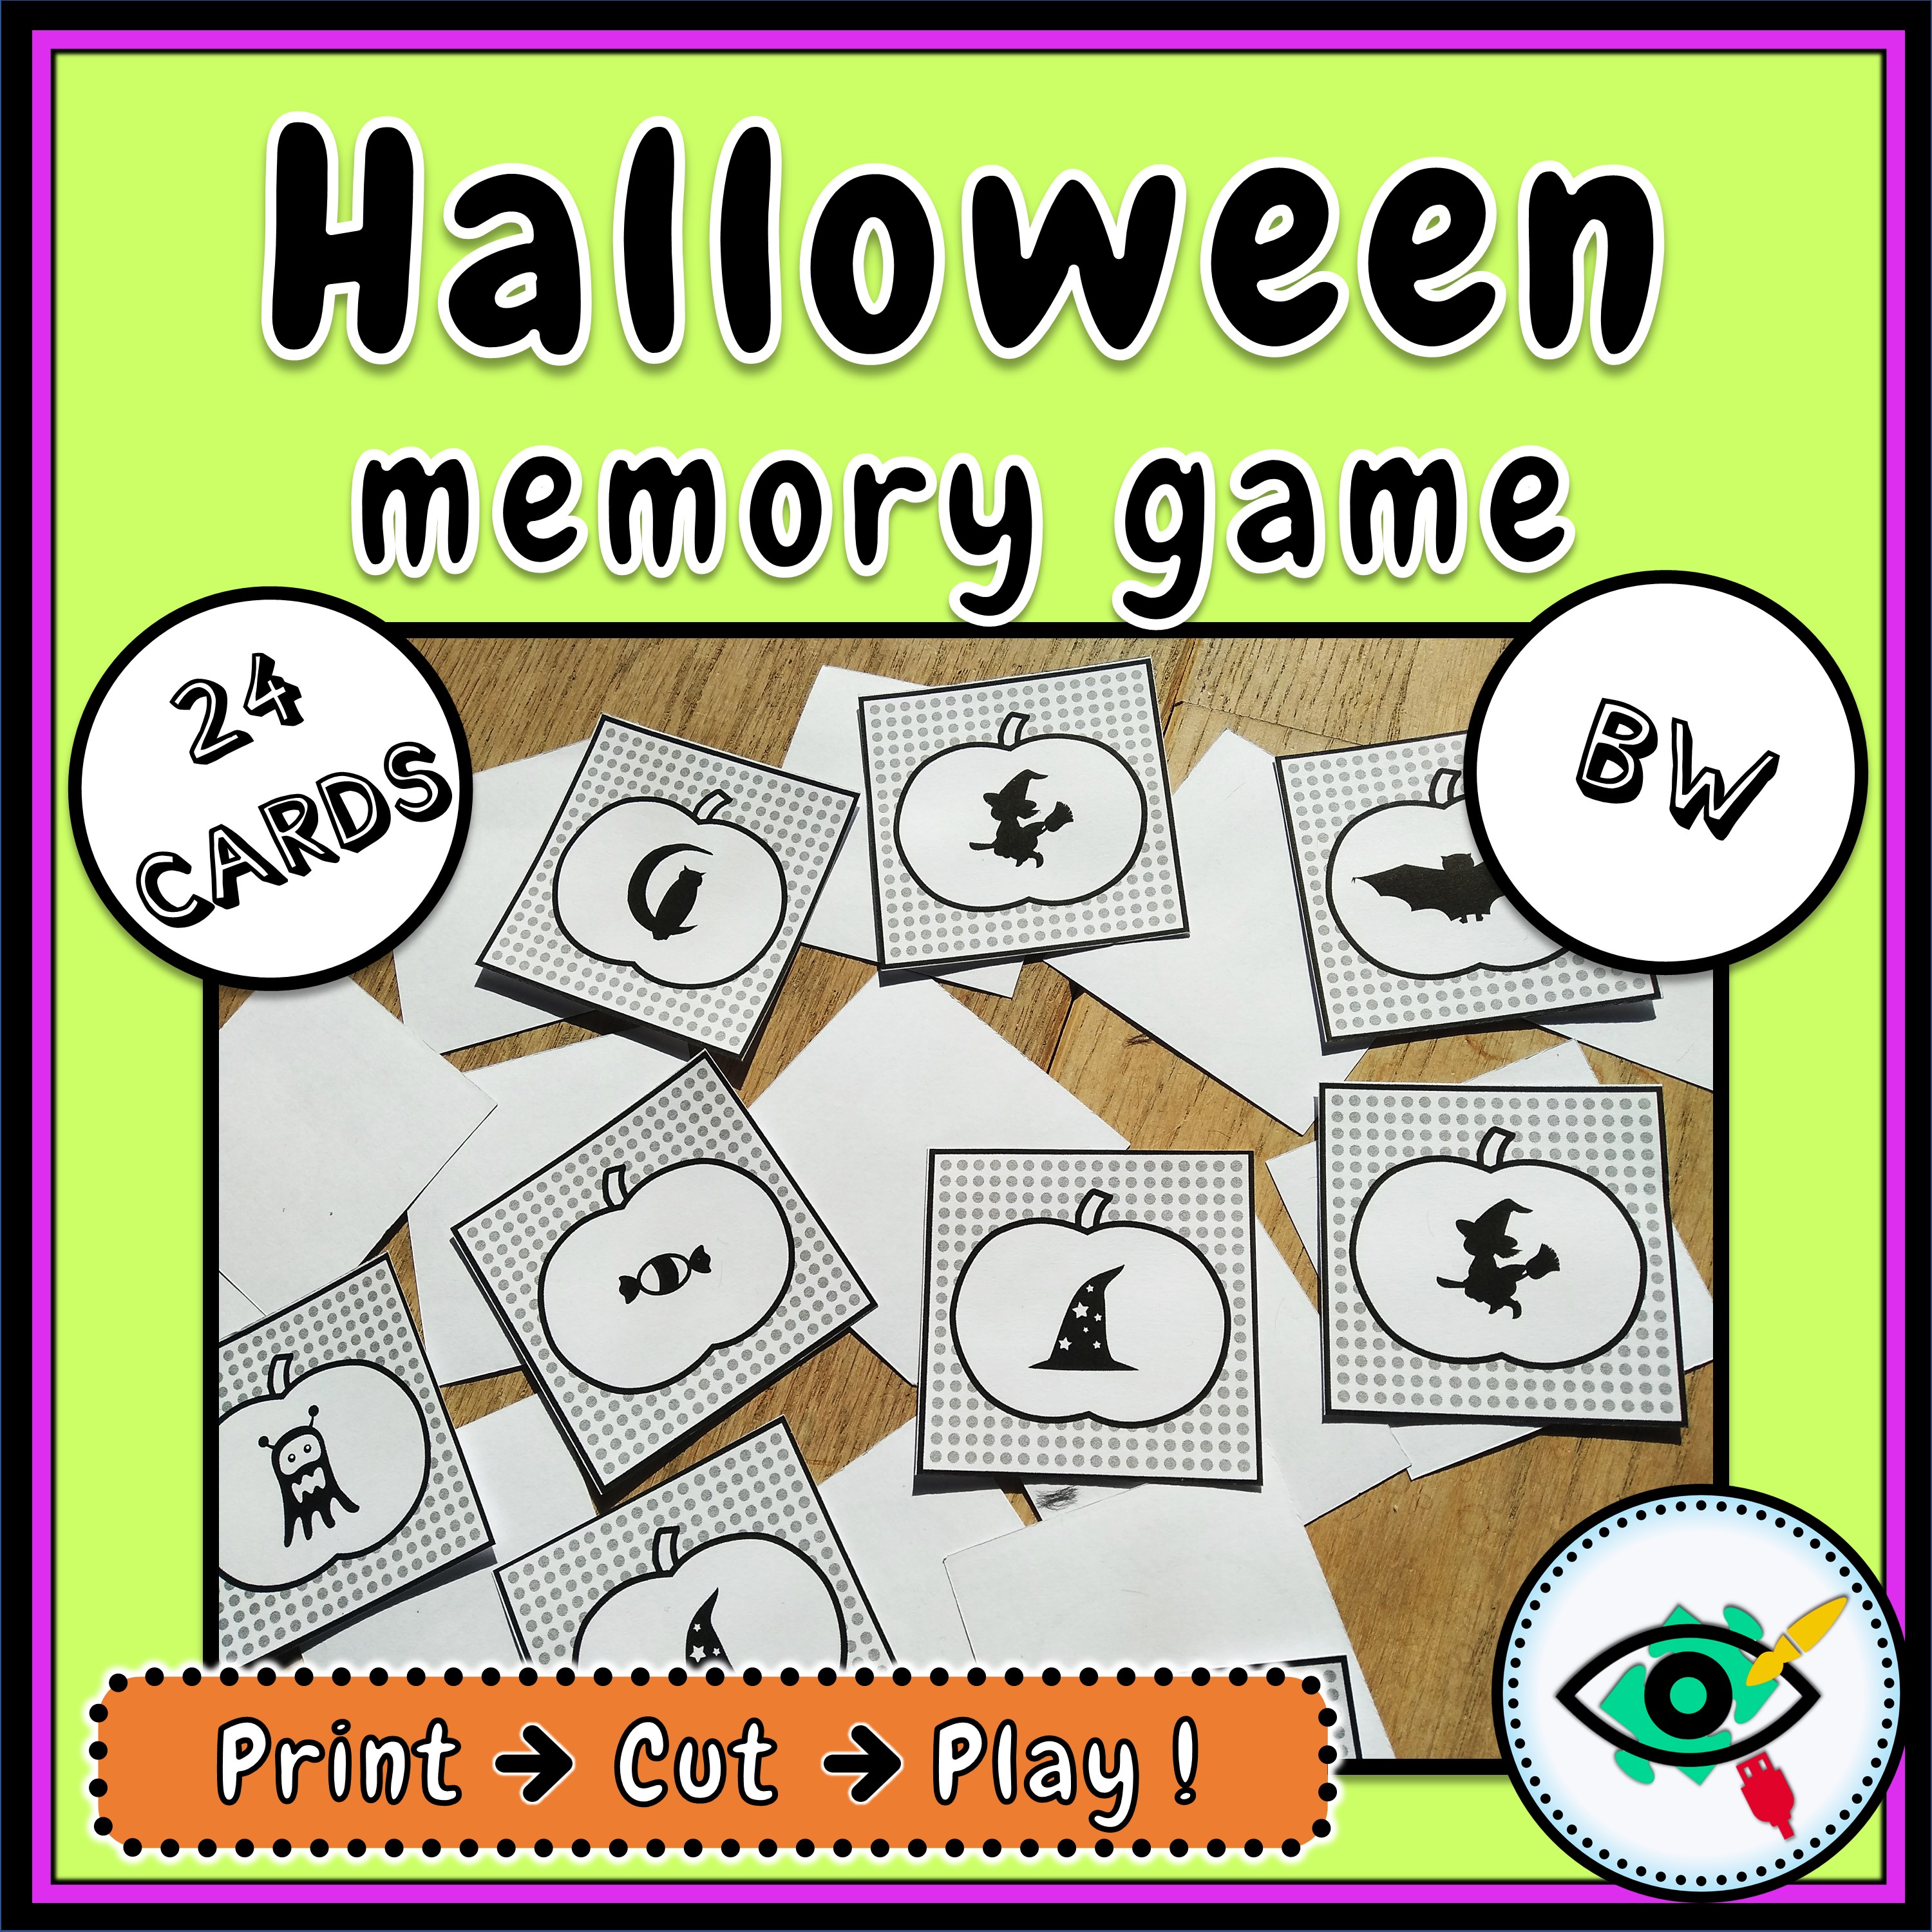 free-printables-fun-stuff-for-the-kids-free-halloween-memory-games